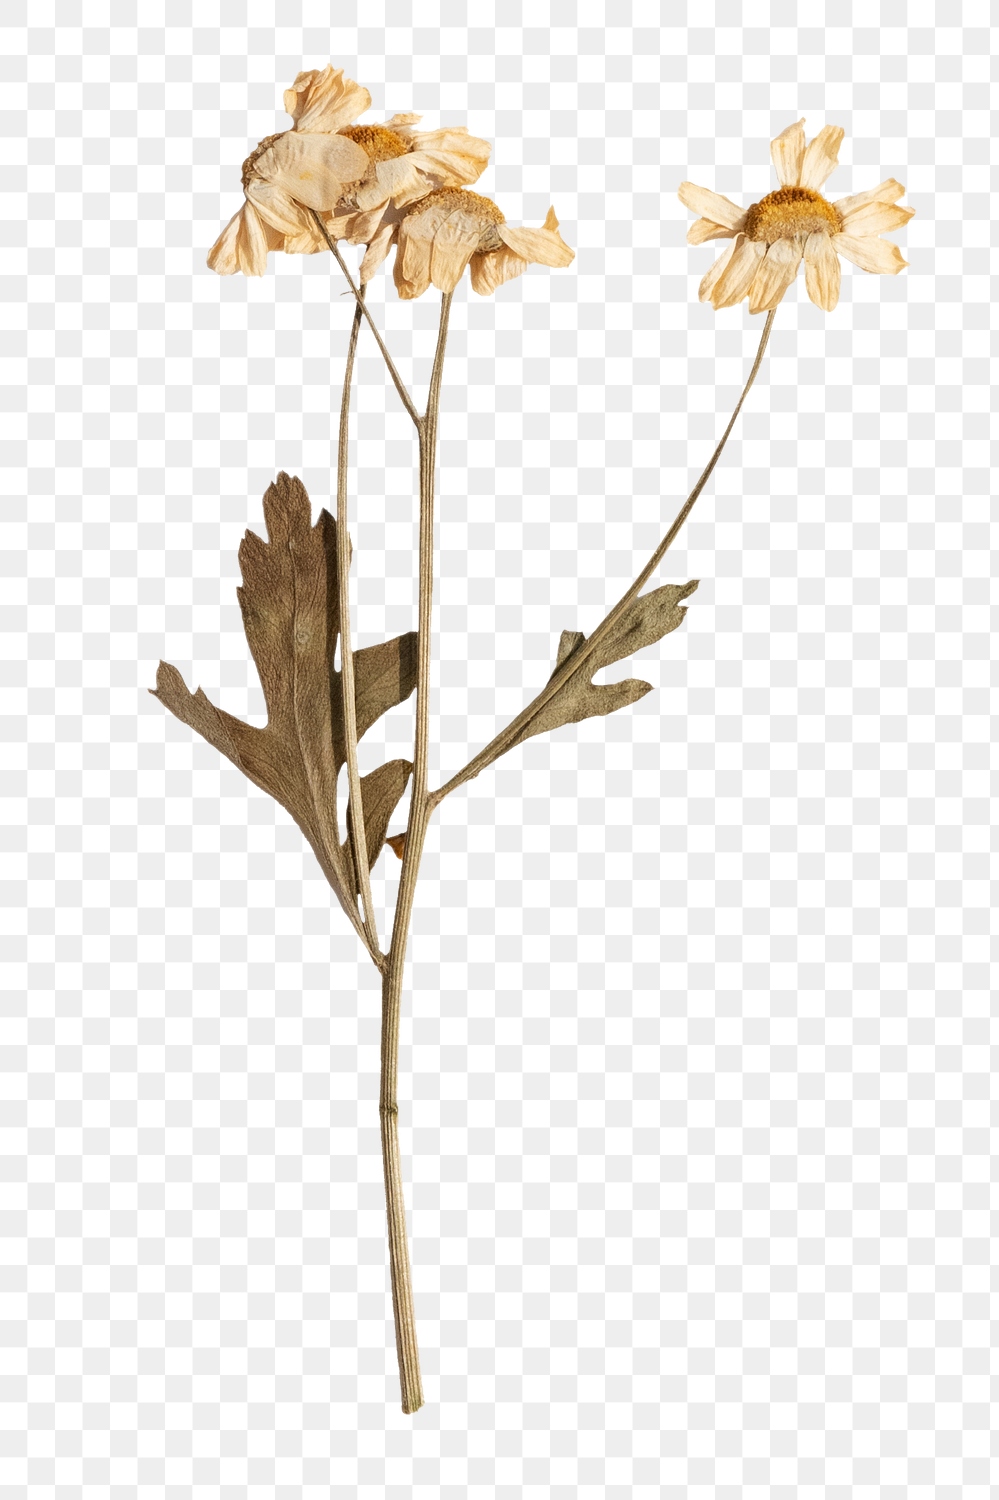 Dried daisy flower design element | Premium PNG Sticker - rawpixel